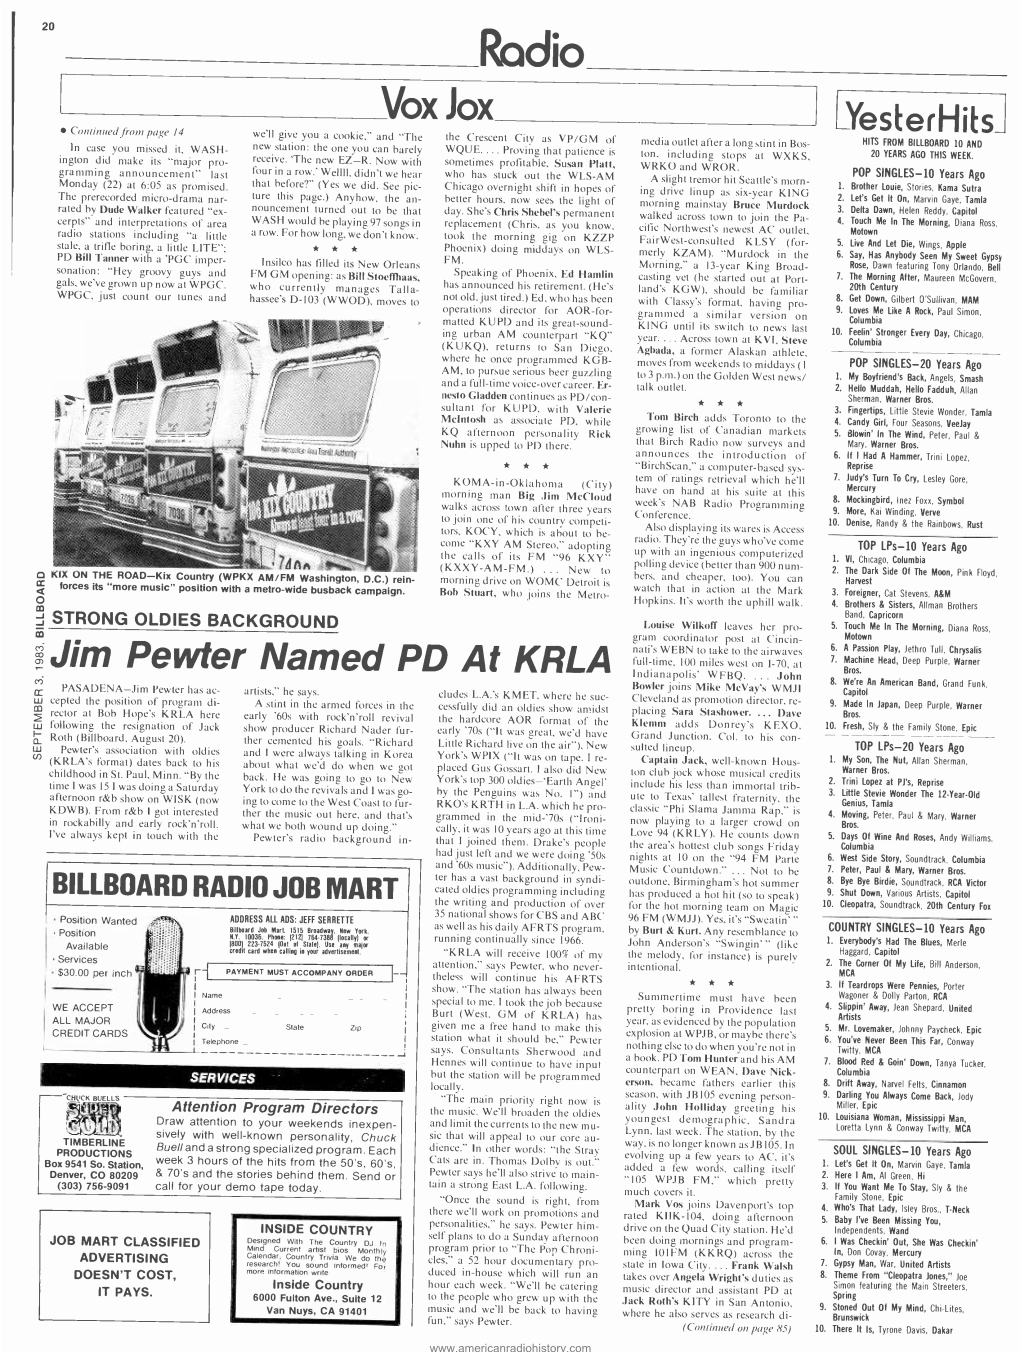 Jim Pewter Named PD at KRLA Indianapolis' Bros